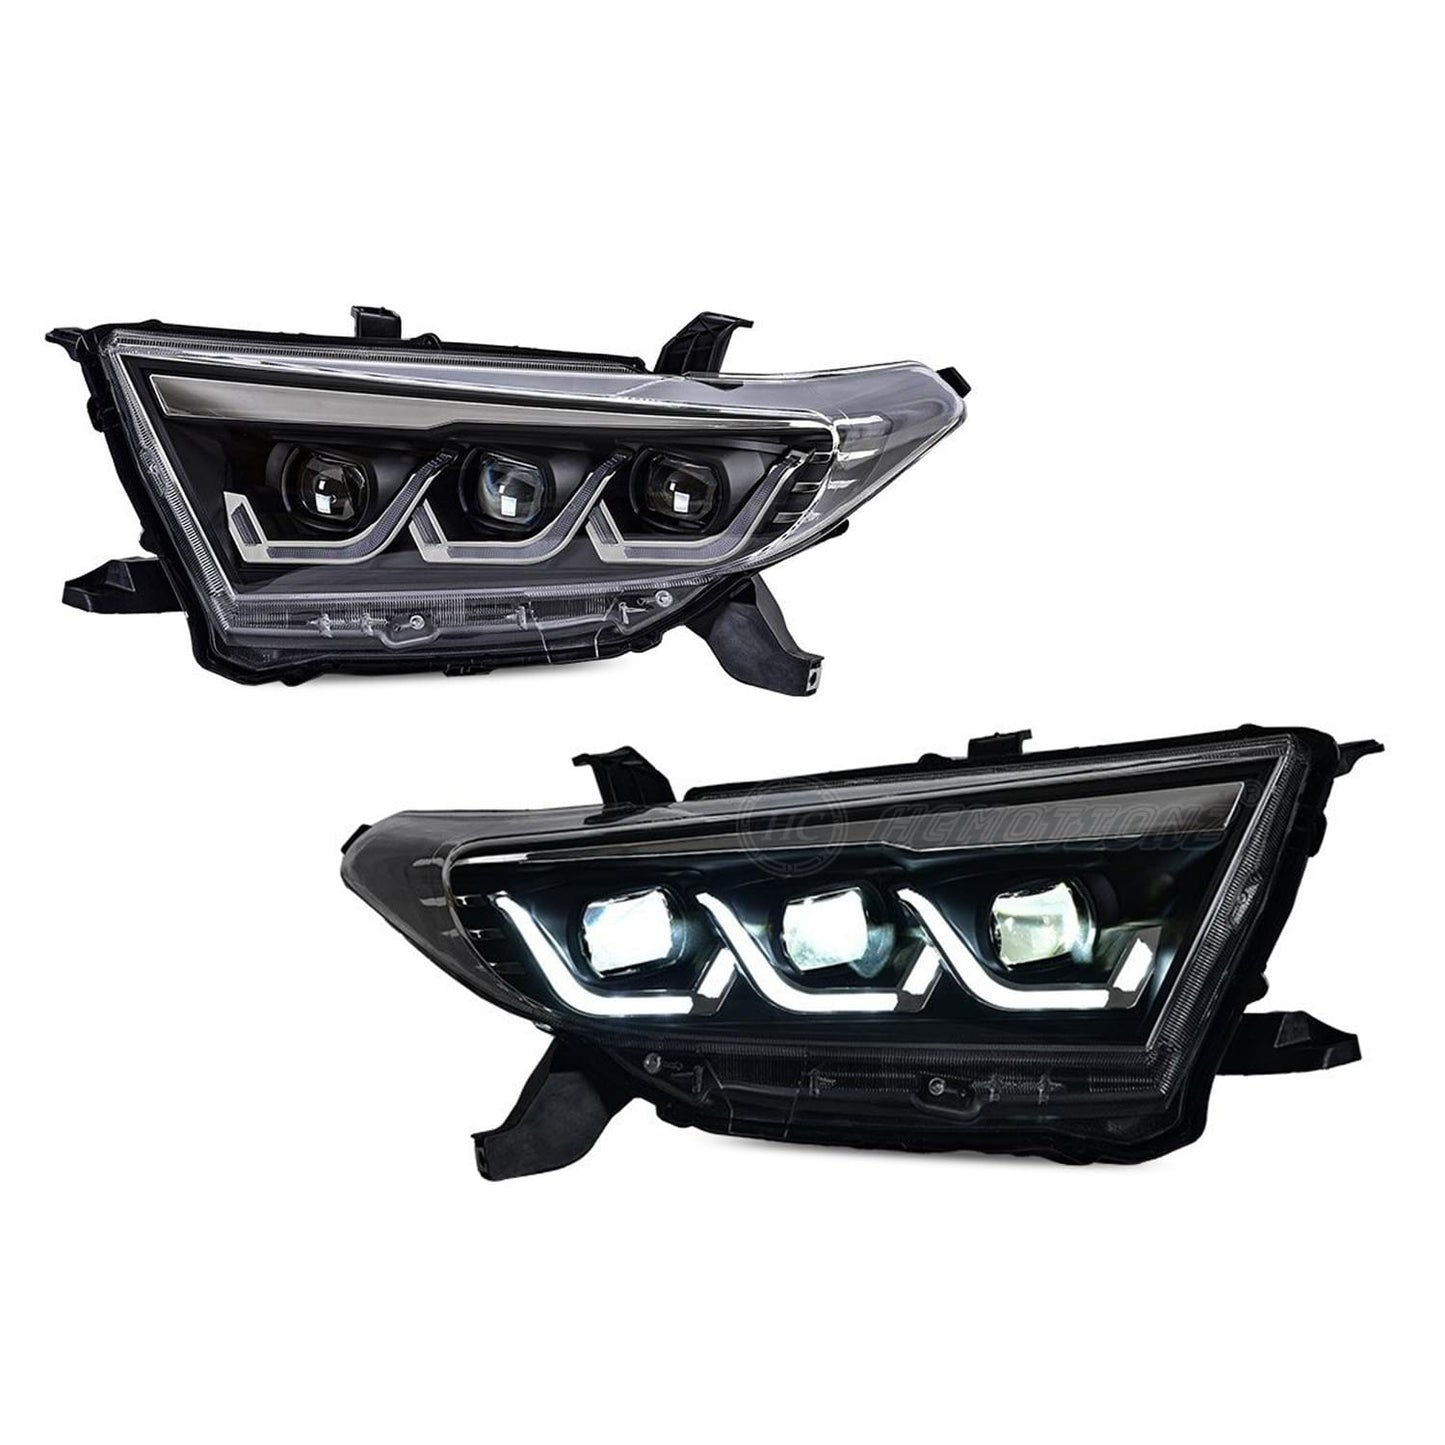 HCMOTION 2011-2013 Toyota Highlander LED Headlights Demon eyes